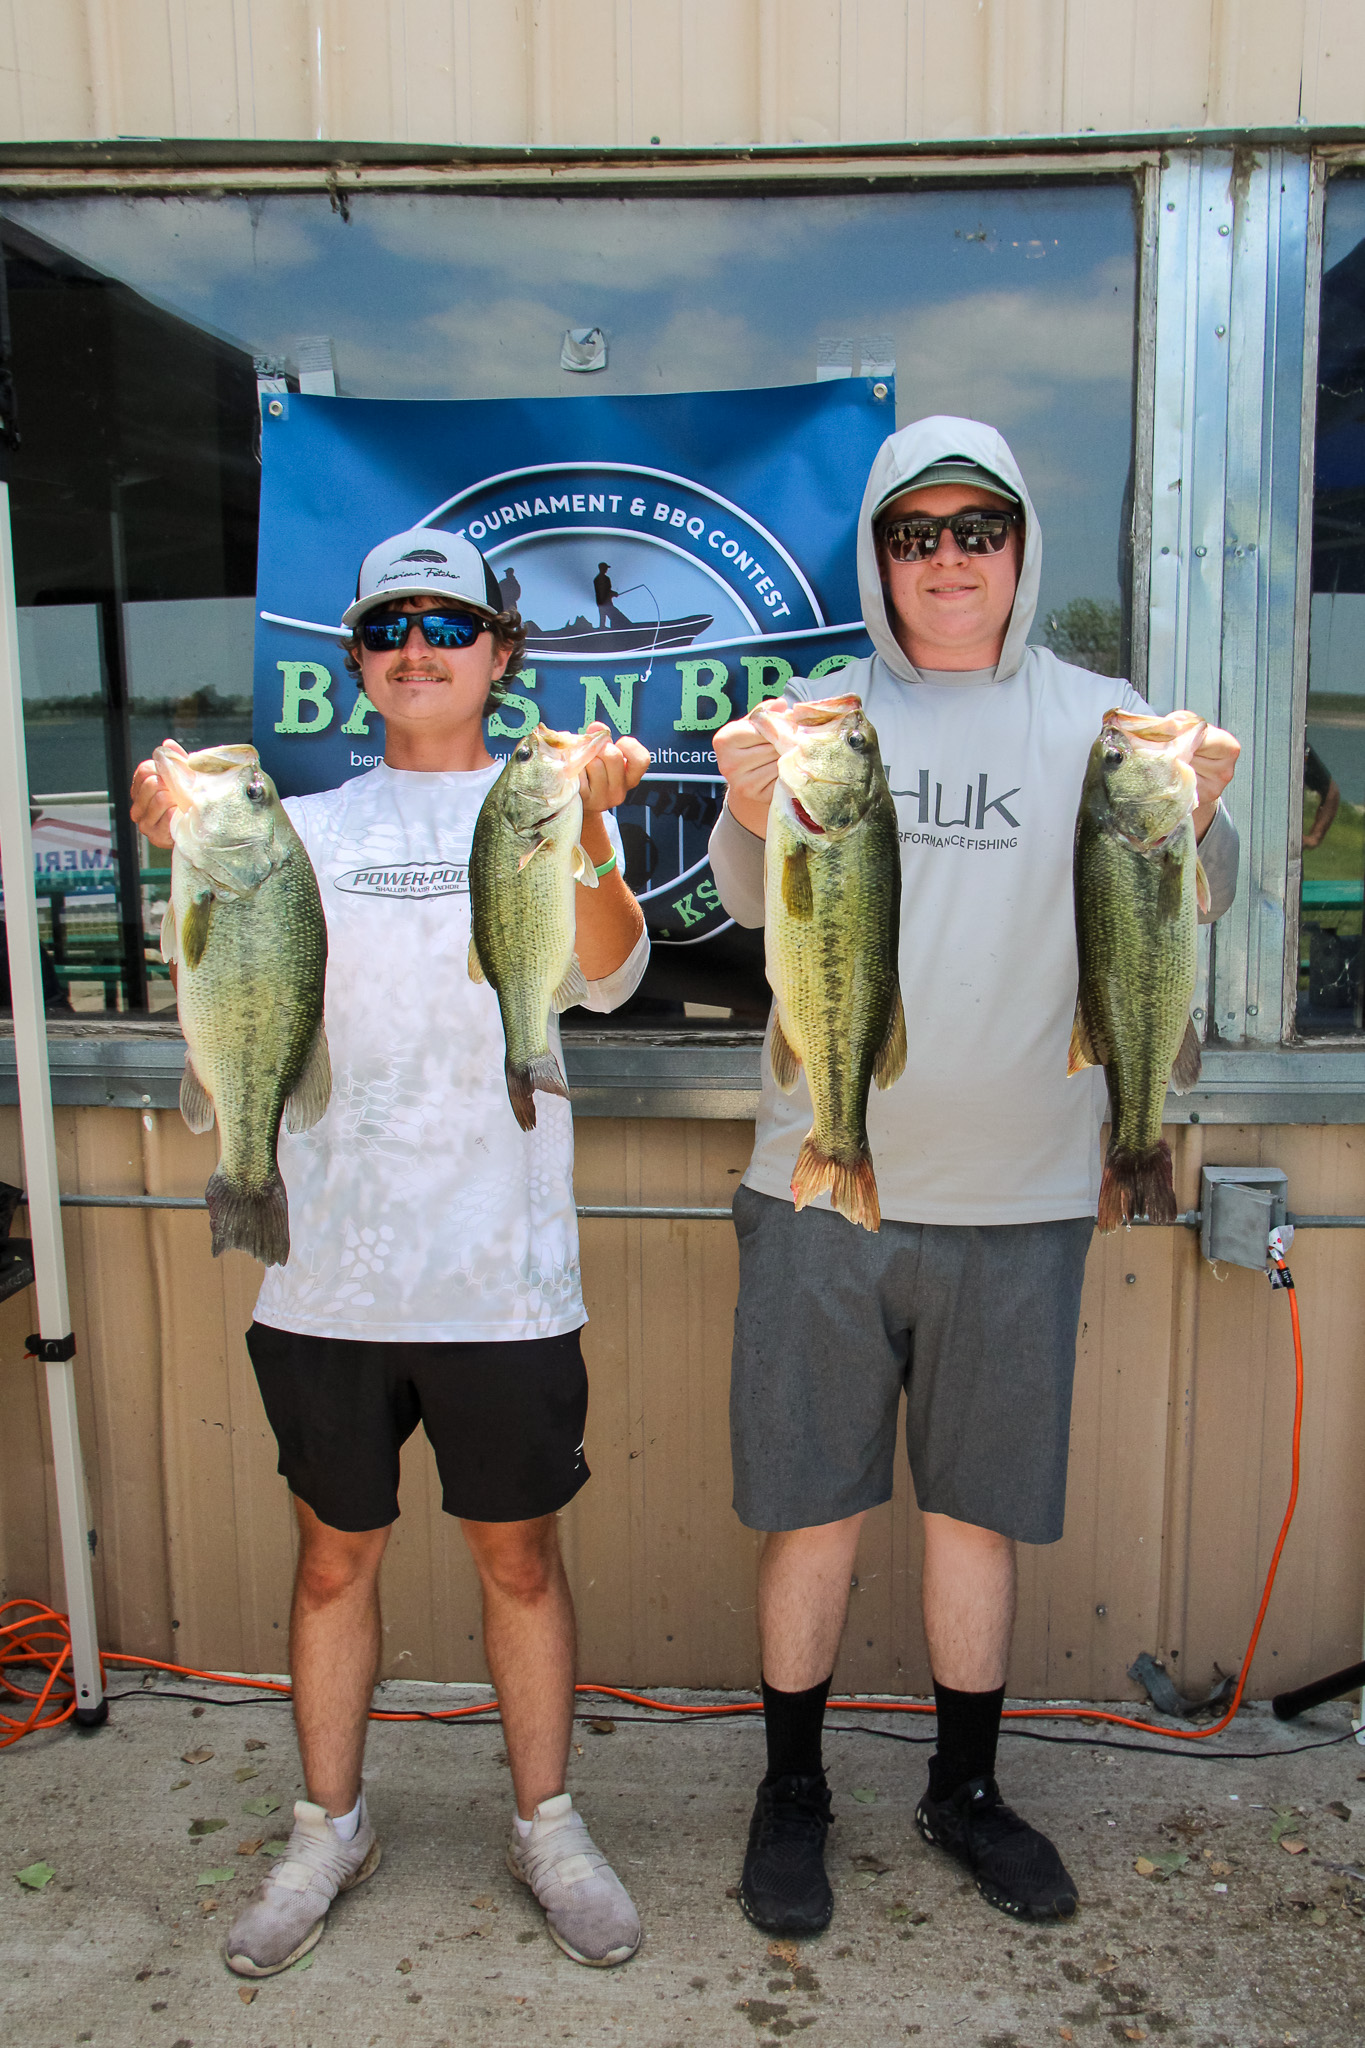 At left, bass fishing tournament winner Koal Meier shows off his impressive catches alongside angler Timber Neal.